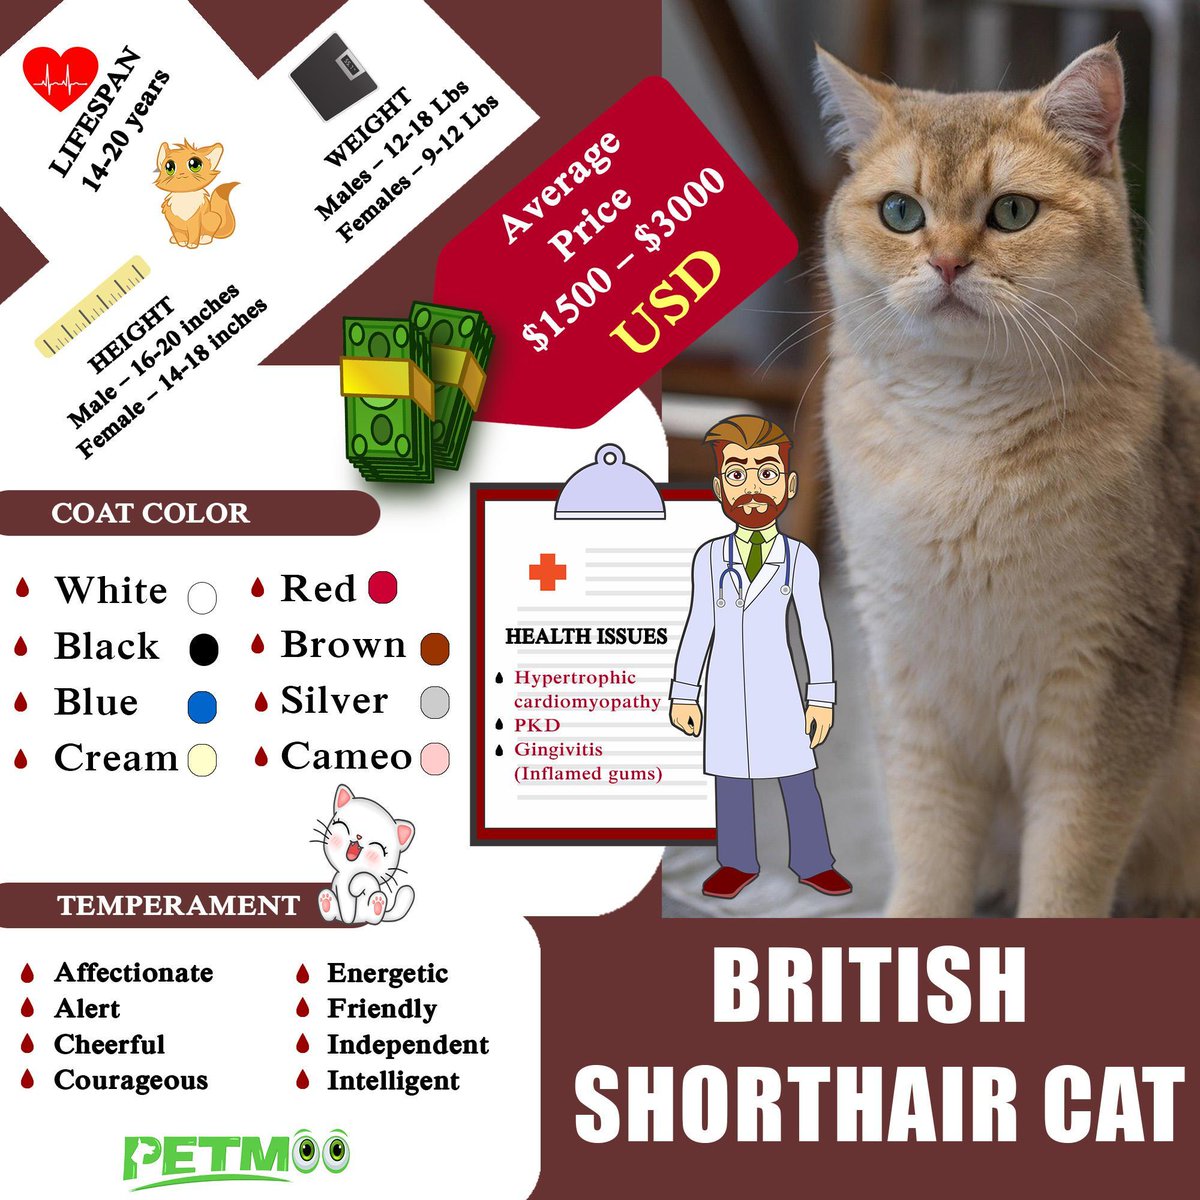 British Shorthair Cat Infographic
#petmoo #pets #cats #catinfographic #britishshorthaircatinfographic